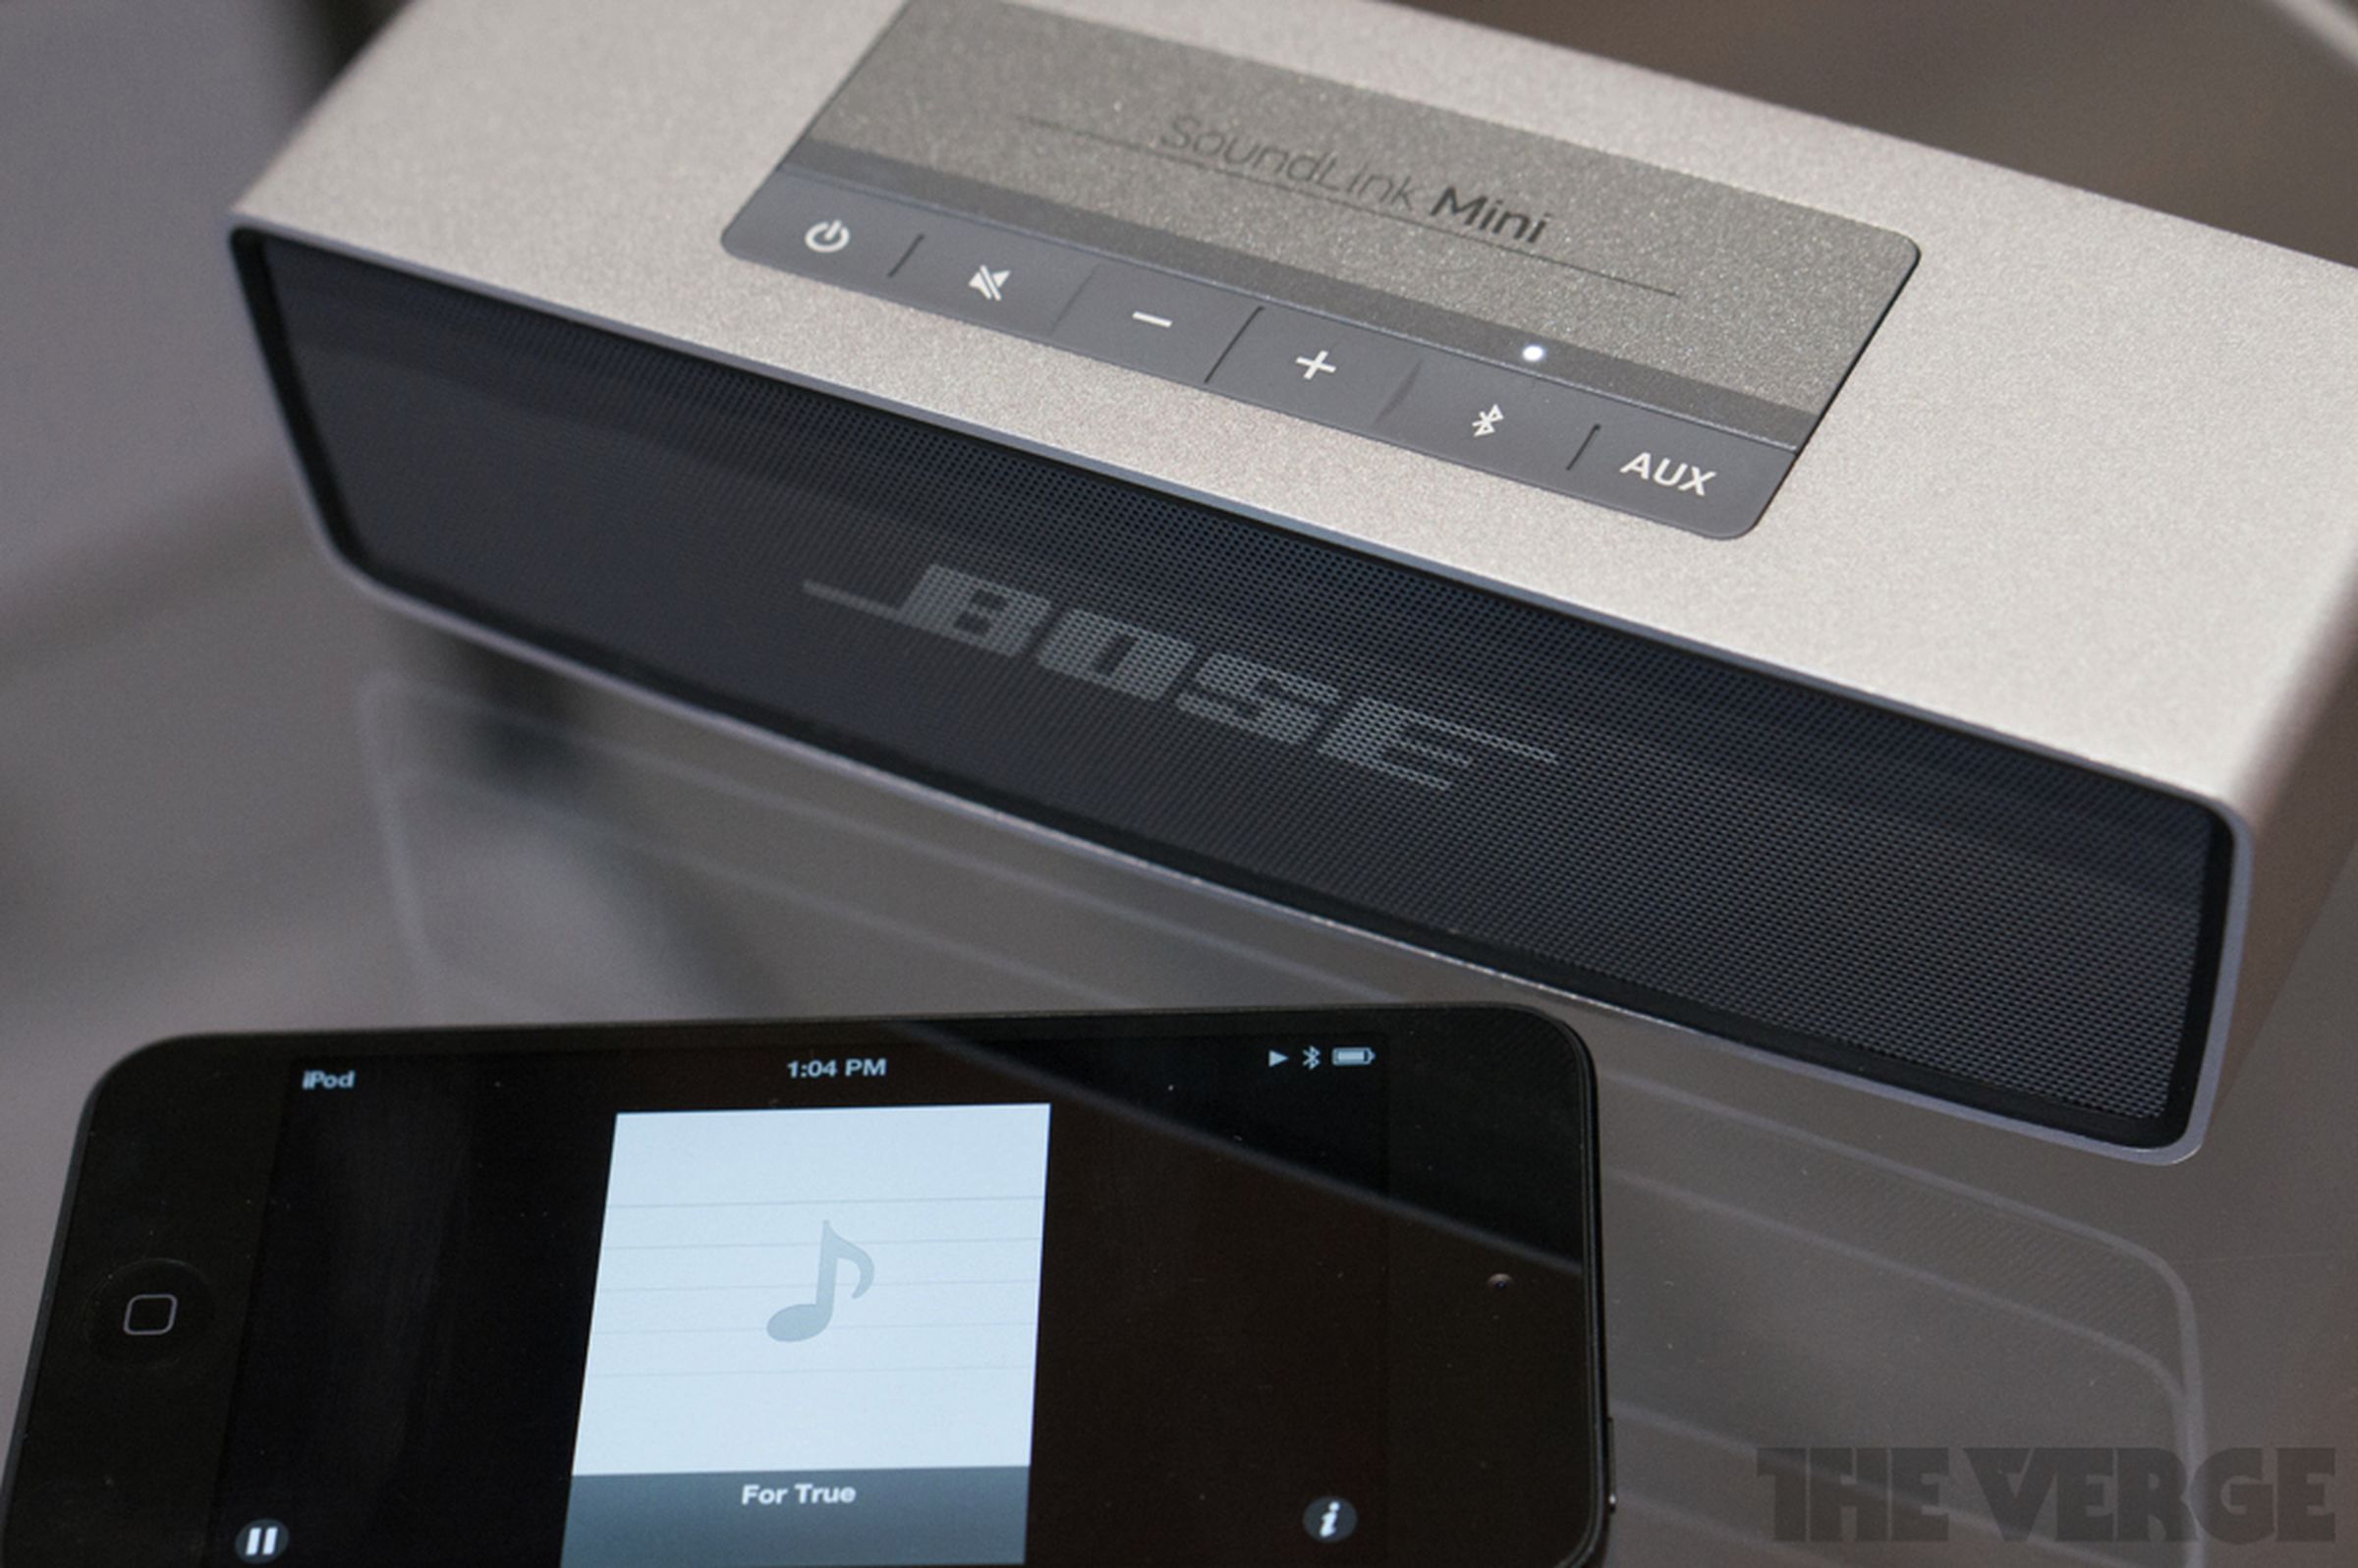 Bose SoundLink Mini hands-on photos